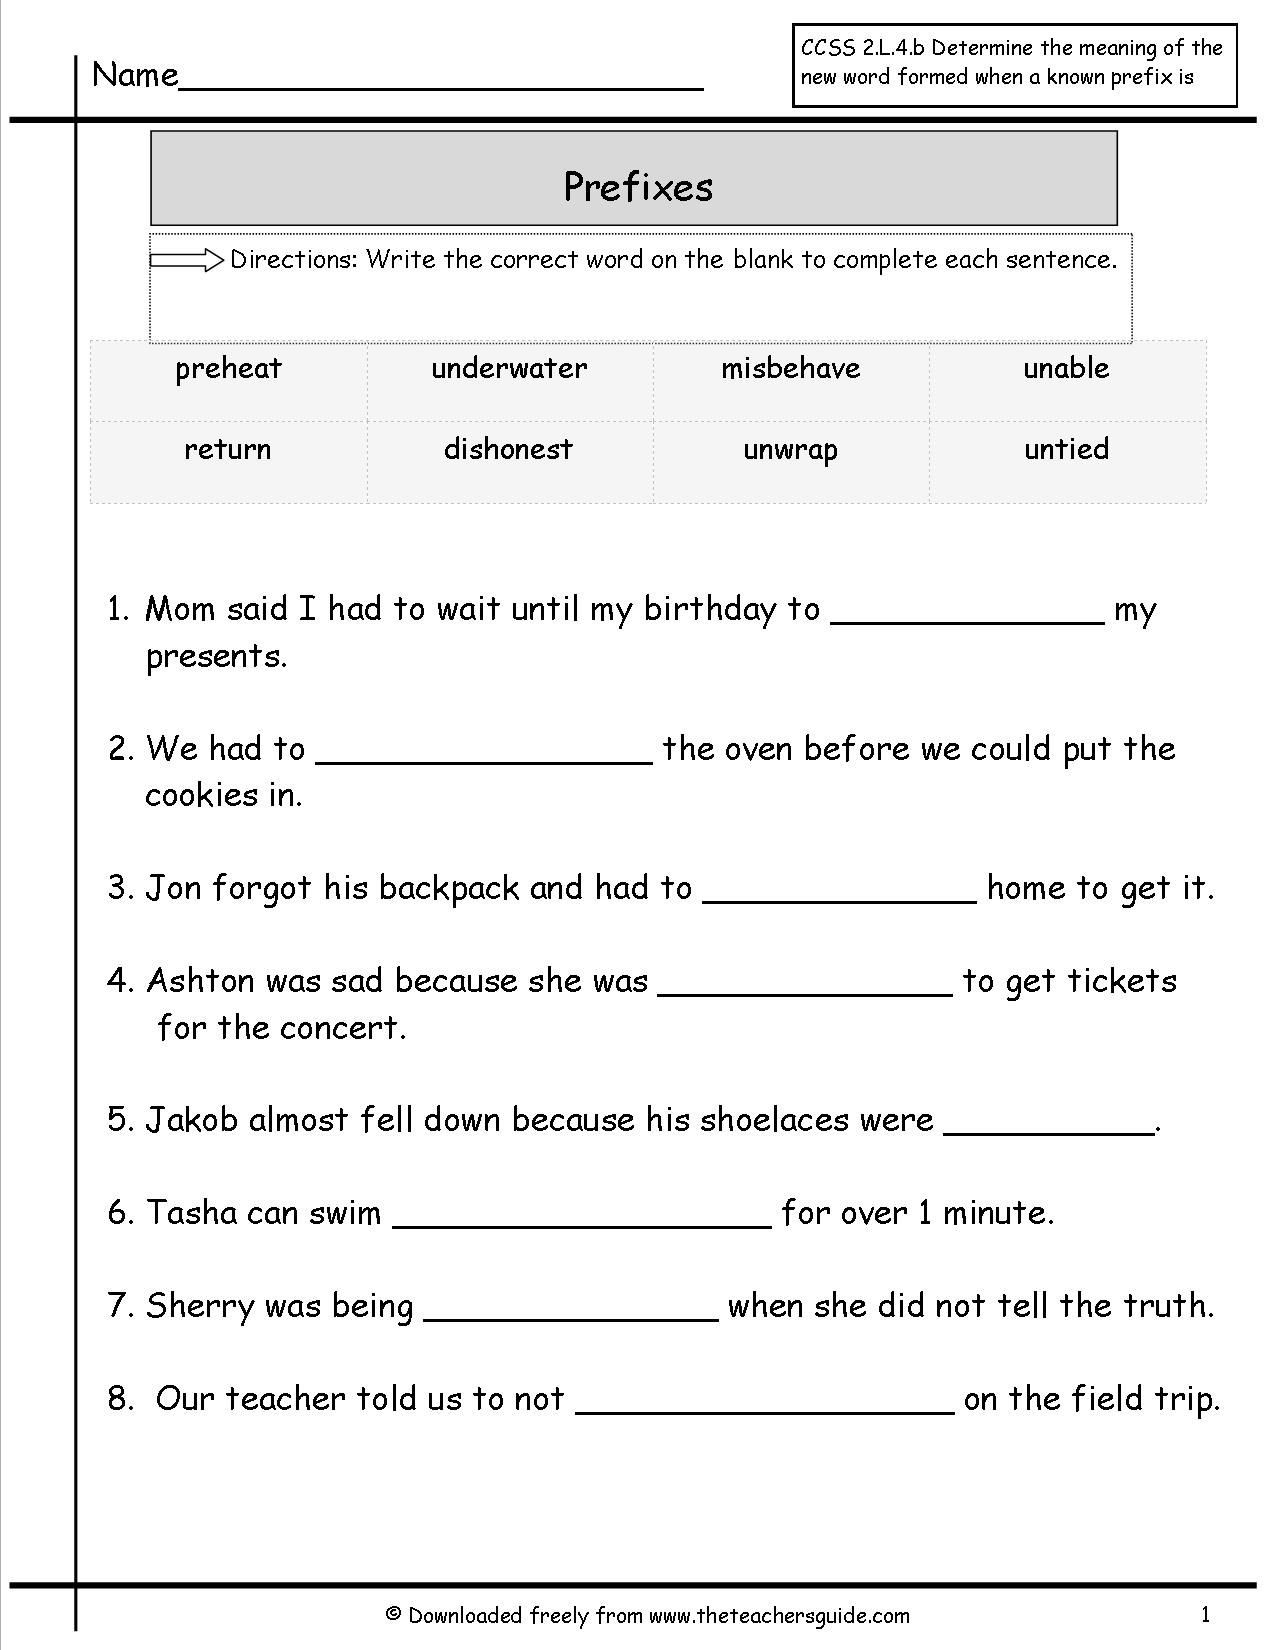 Prefixes and Suffixes Worksheet Free Prefixes and Suffixes Worksheets From the Teacher S